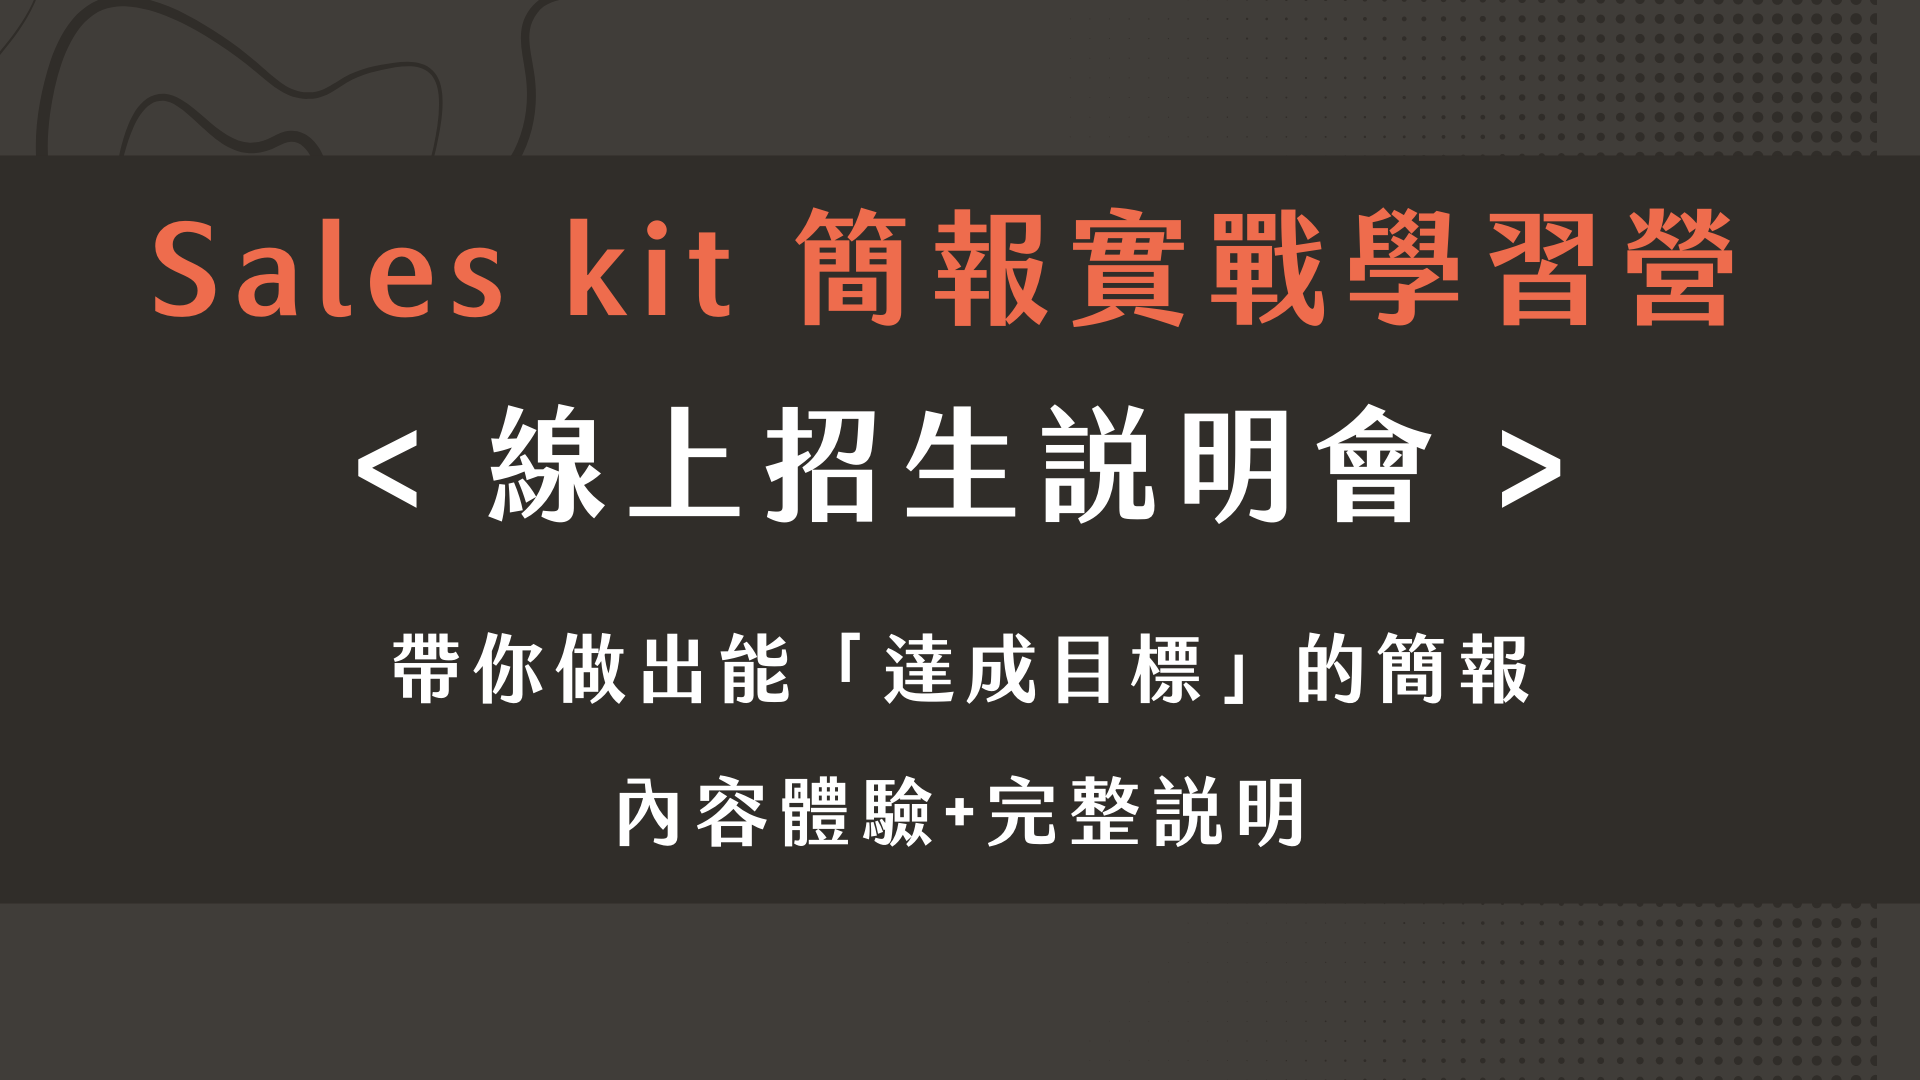 Sales kit 簡報實戰學習營 - 線上招生說明會課程封面